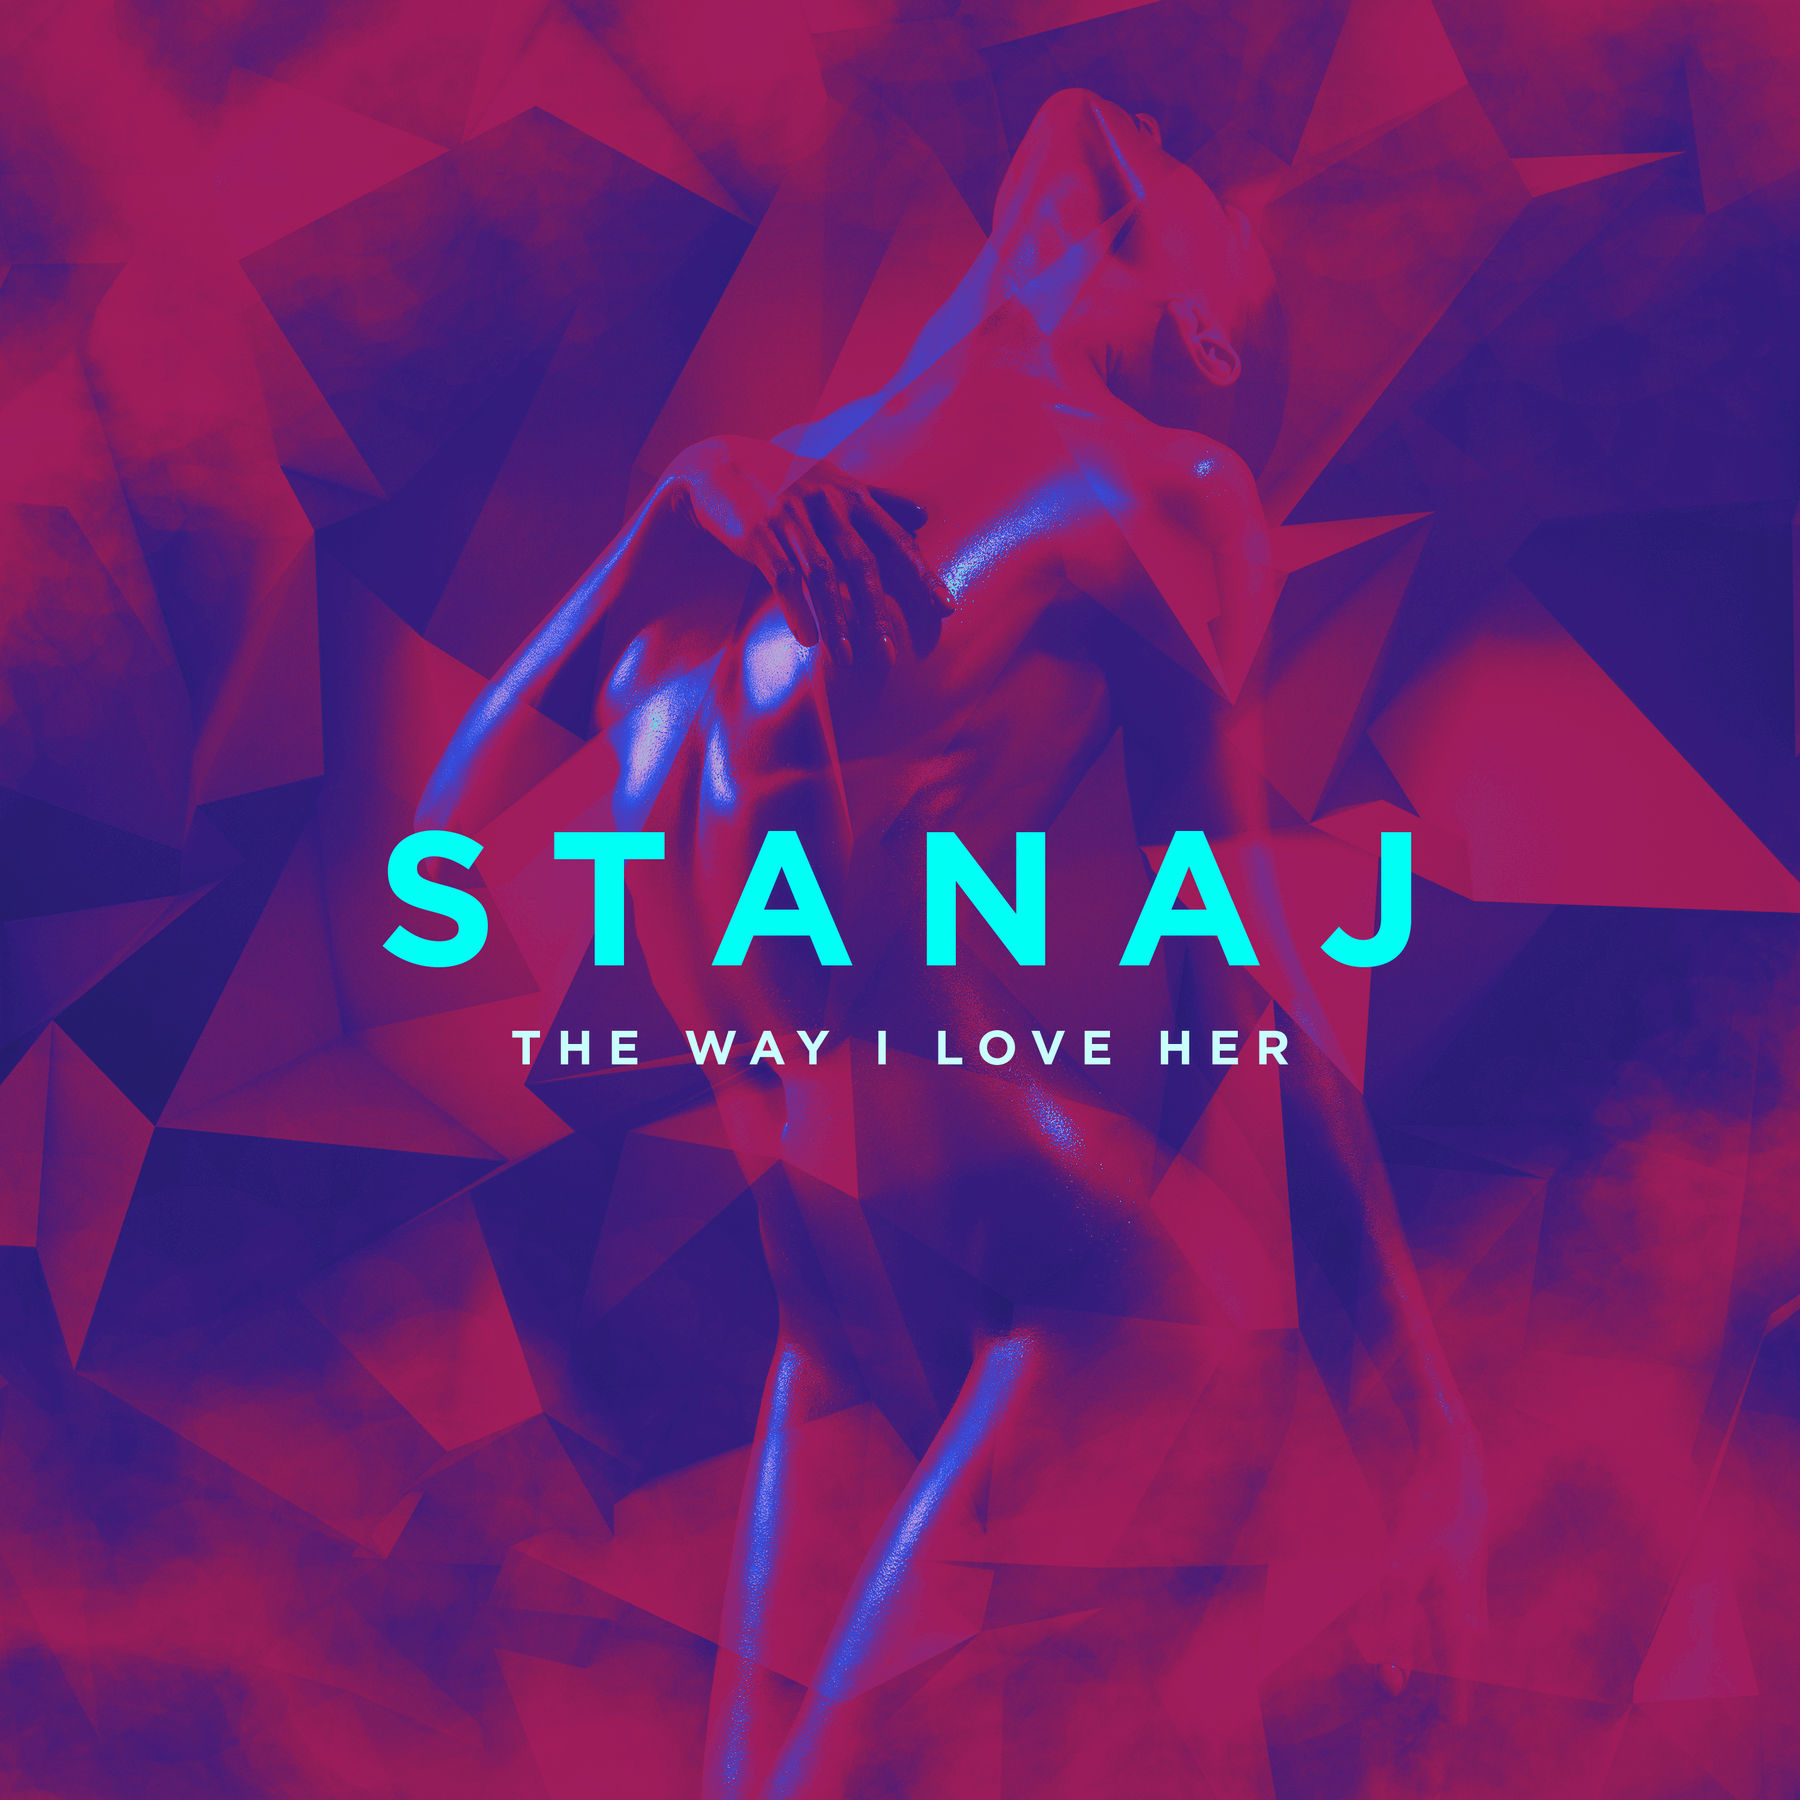 The Way I Love Her by Stanaj - Listen